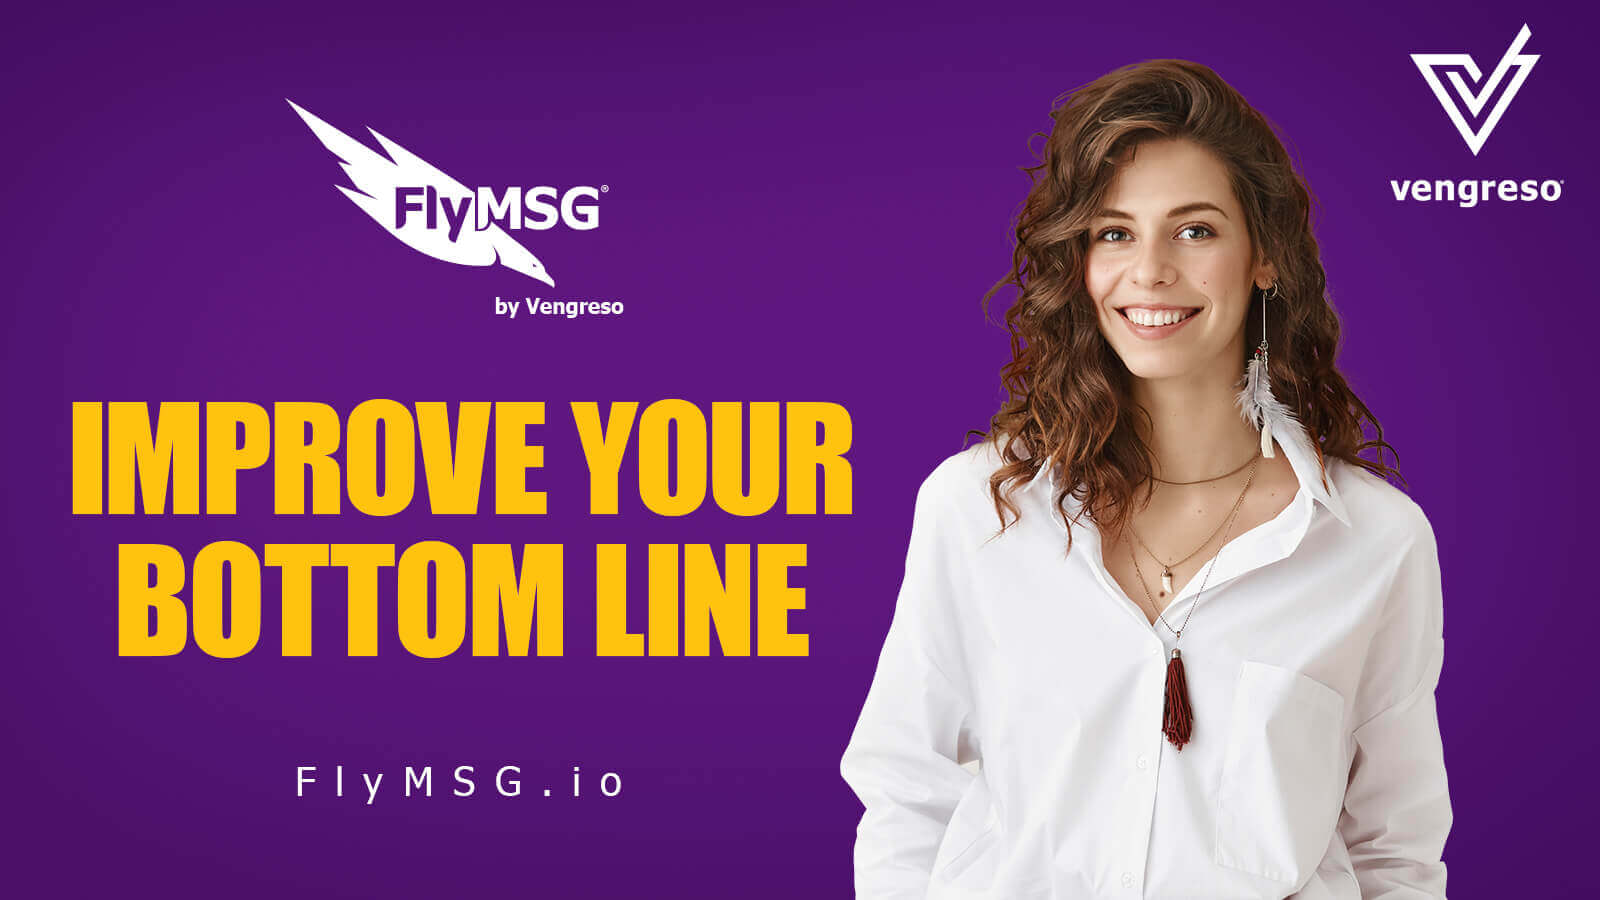 FlyMSG for Business Owners & Entrepreneurs IMPROVE YOUR BOTTOM LINE.